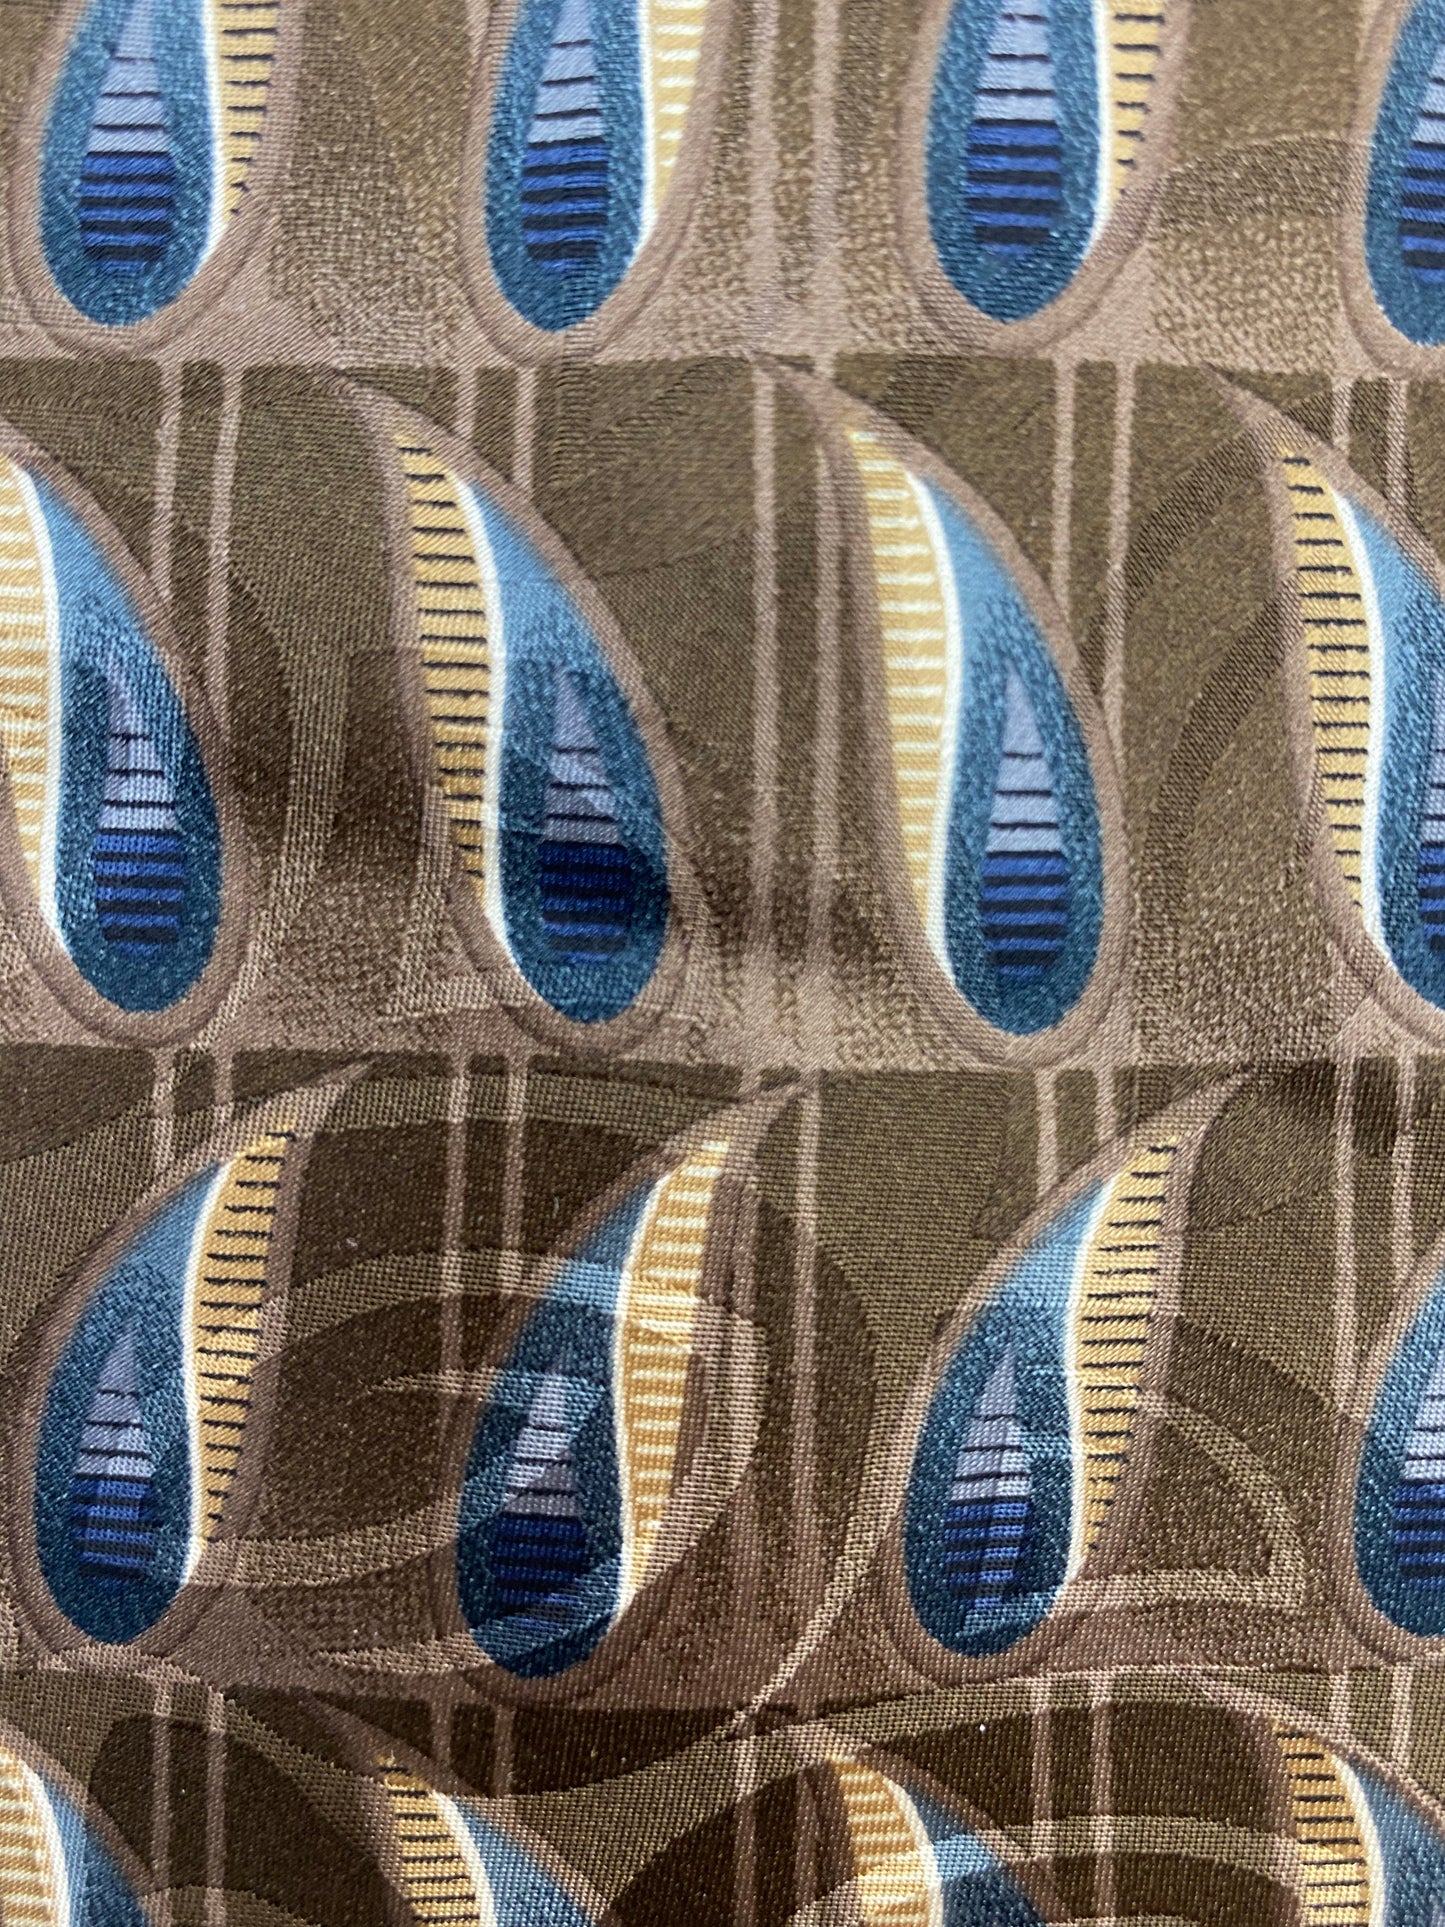 Close-up detail of: 90s Deadstock Silk Necktie, Men's Vintage Taupe/ Blue Boteh Pattern Tie, NOS